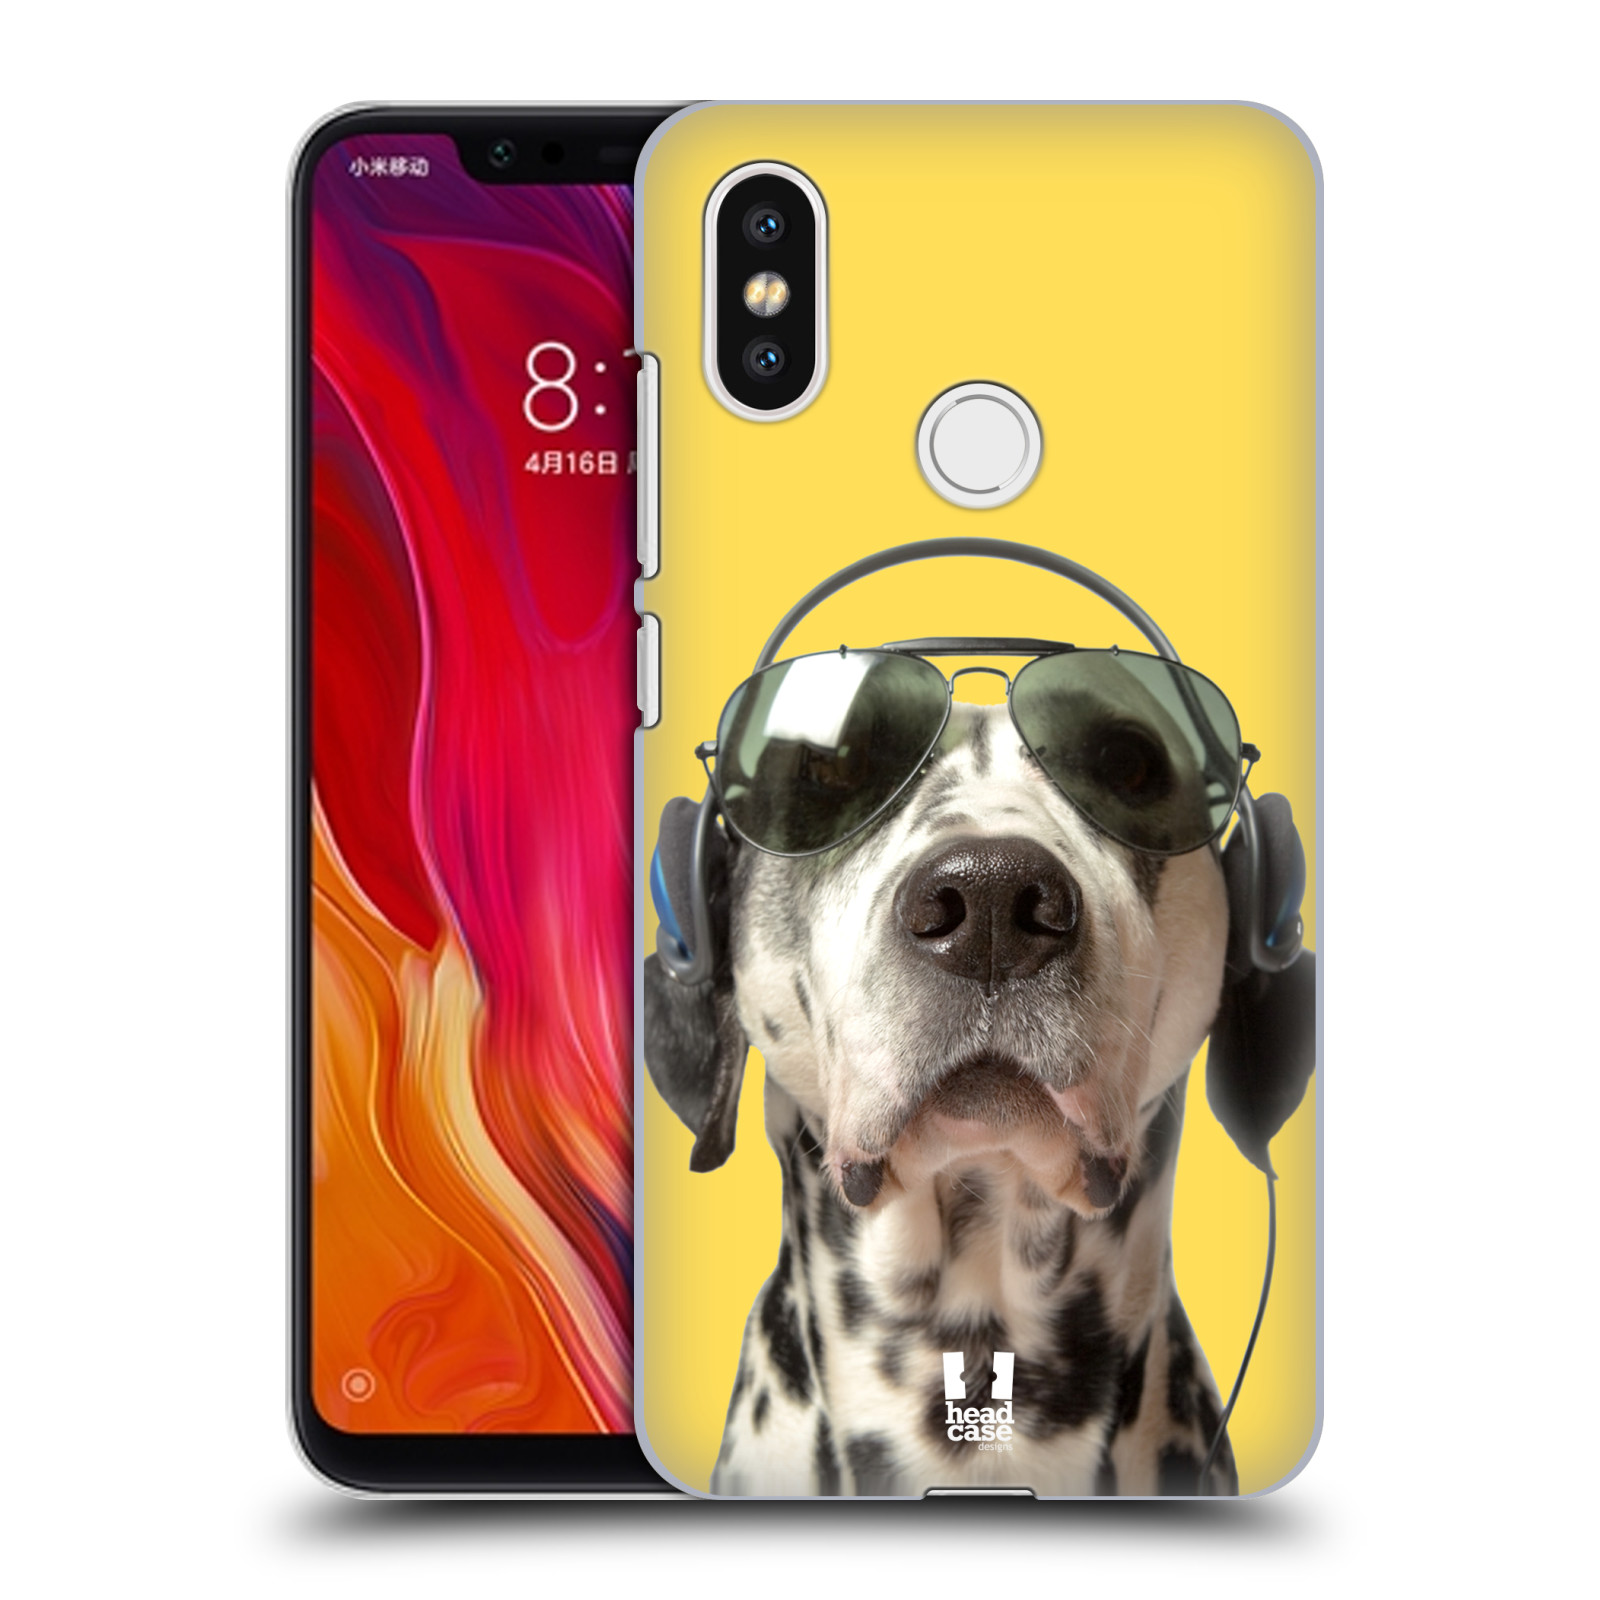 HEAD CASE plastový obal na mobil Xiaomi Mi 8 vzor Legrační zvířátka dalmatin se sluchátky žlutá